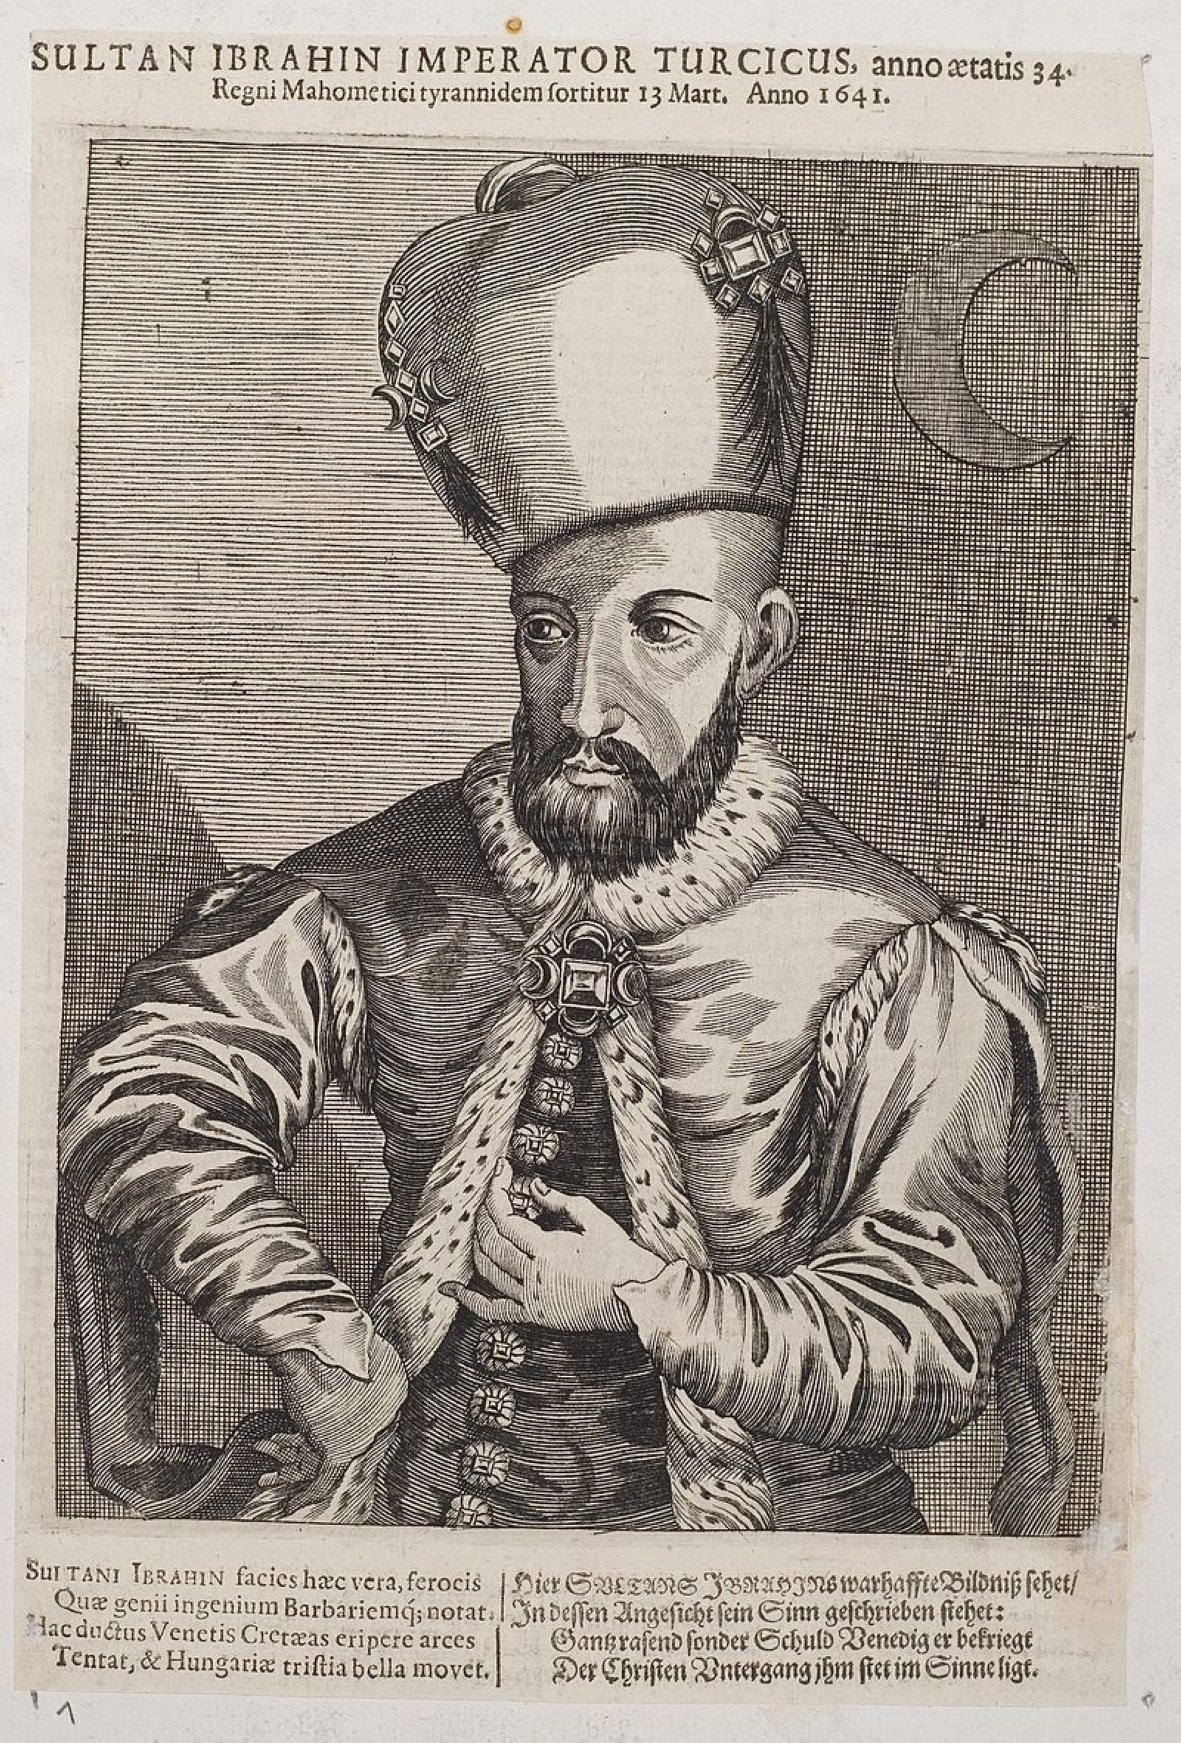 A depiction of Sultan Ibrahim by Arolsen Klebeband.